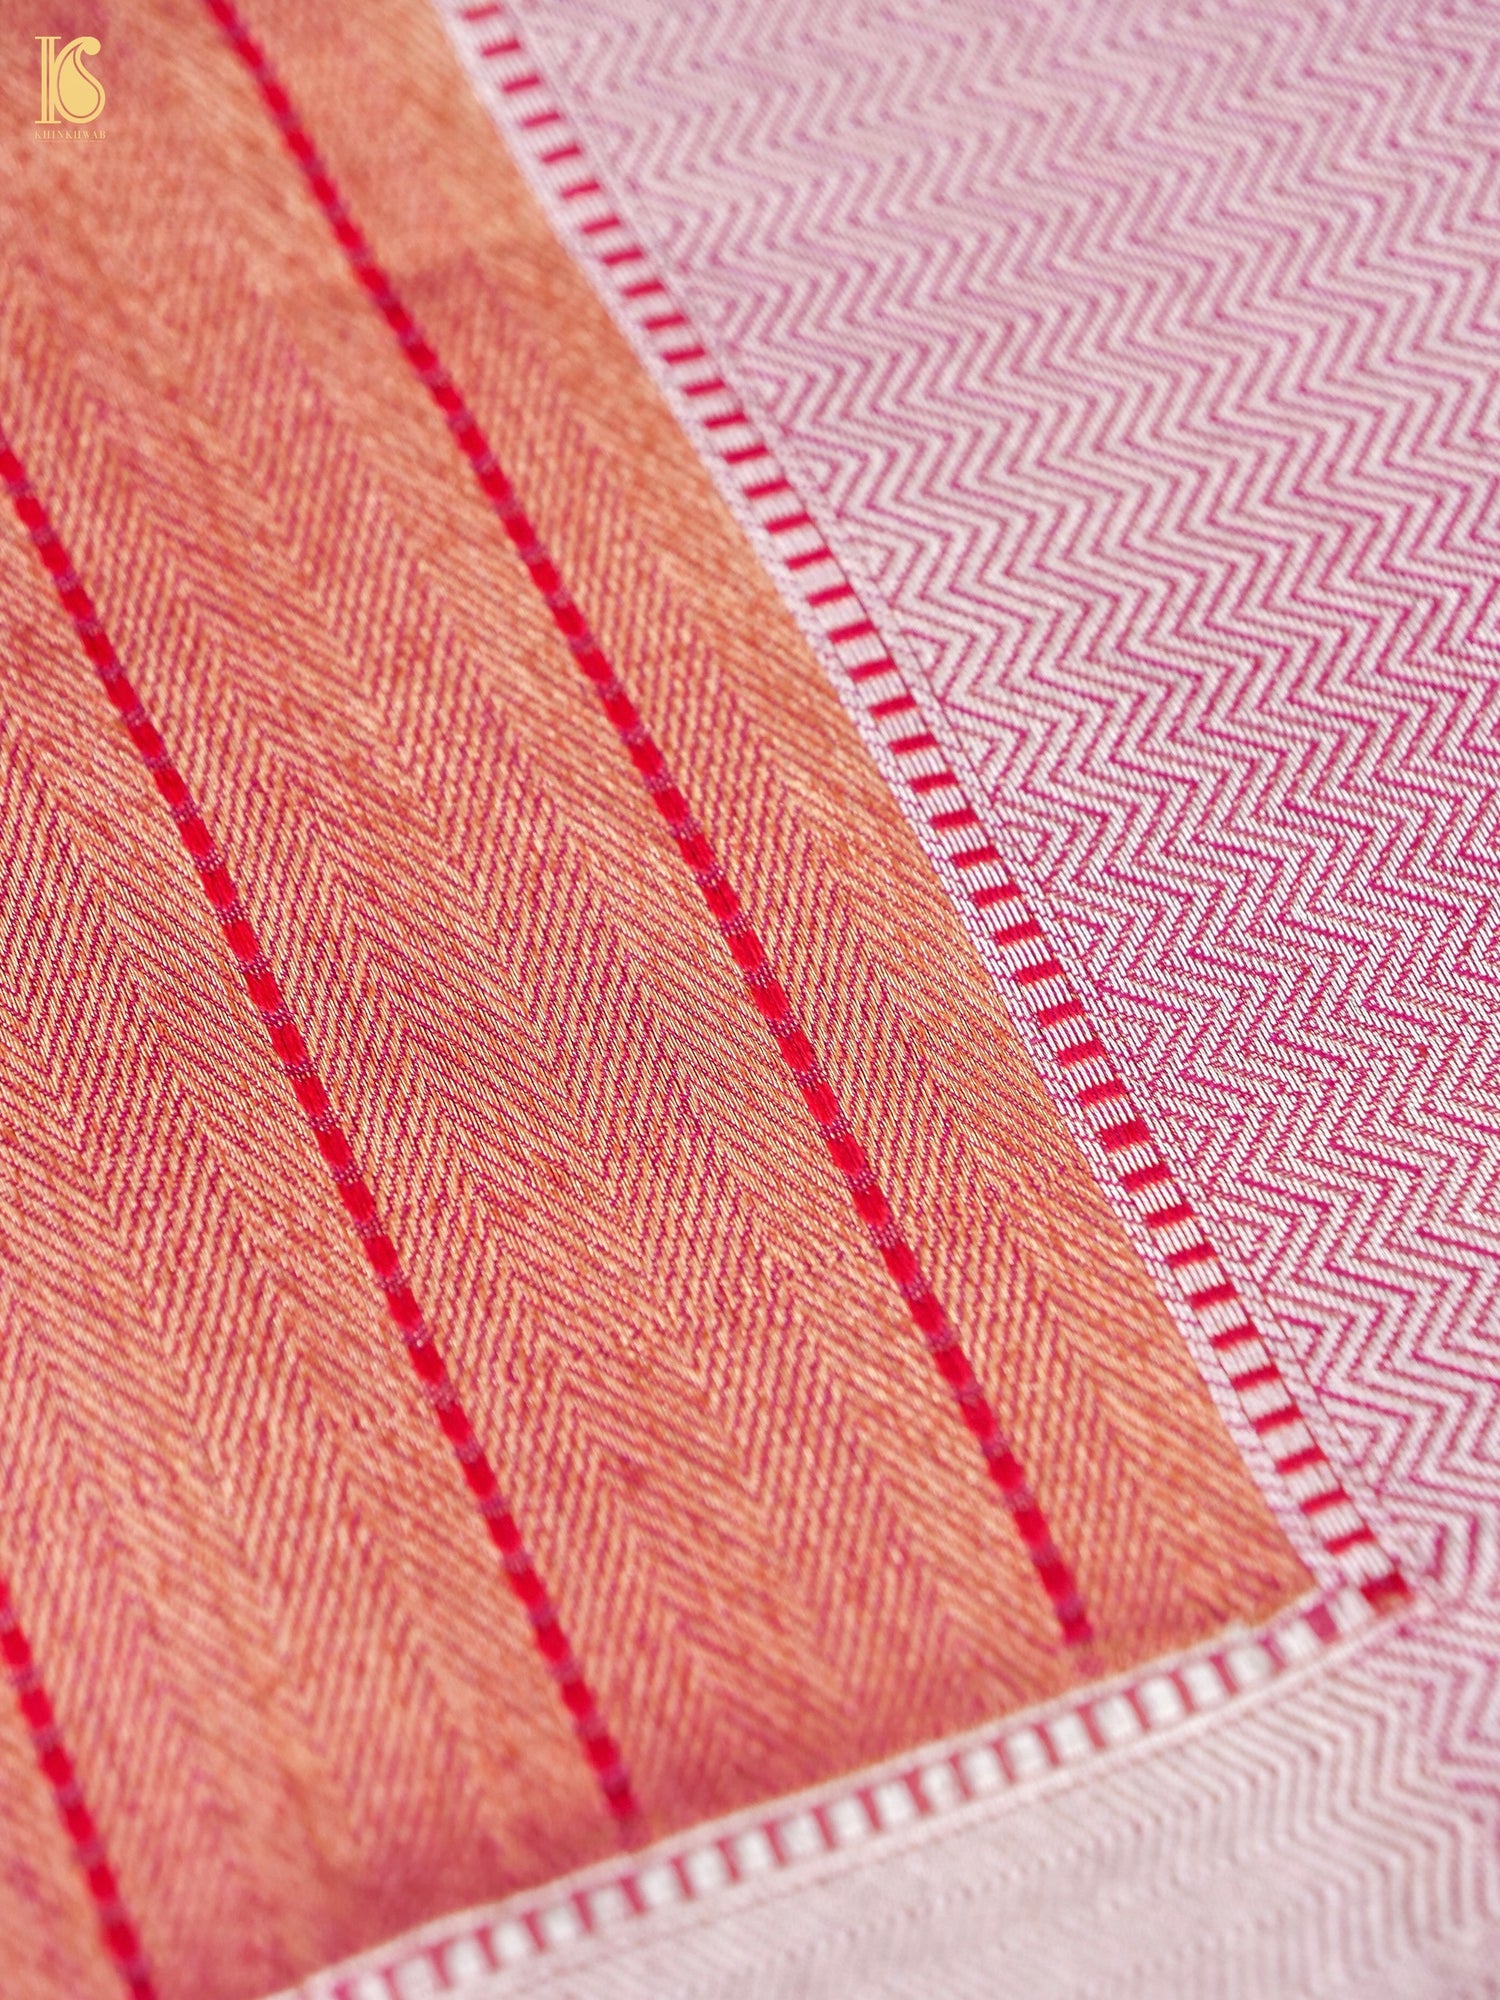 Handloom Banarasi Tissue Silk Saree